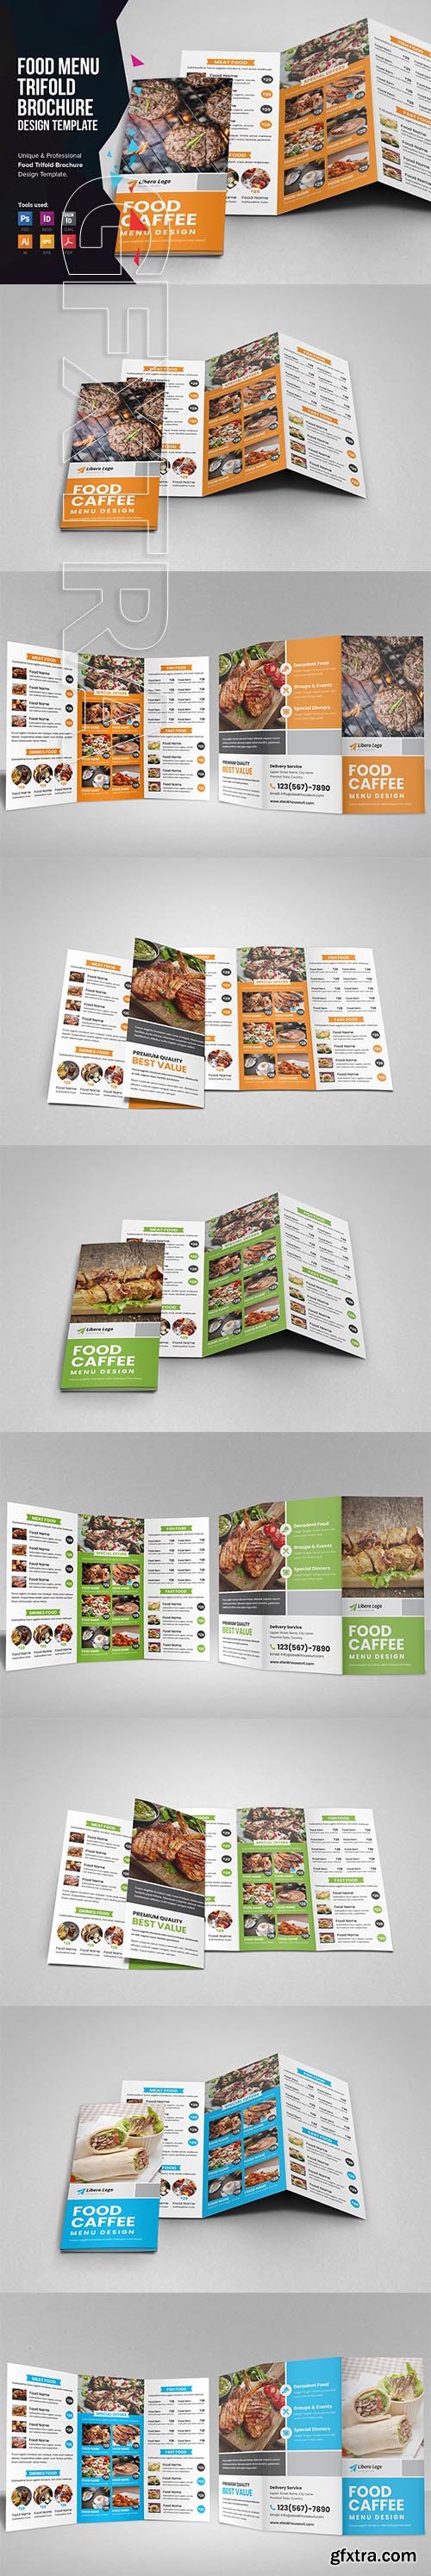 CreativeMarket - Food Menu Trifold Brochure v2 3361495